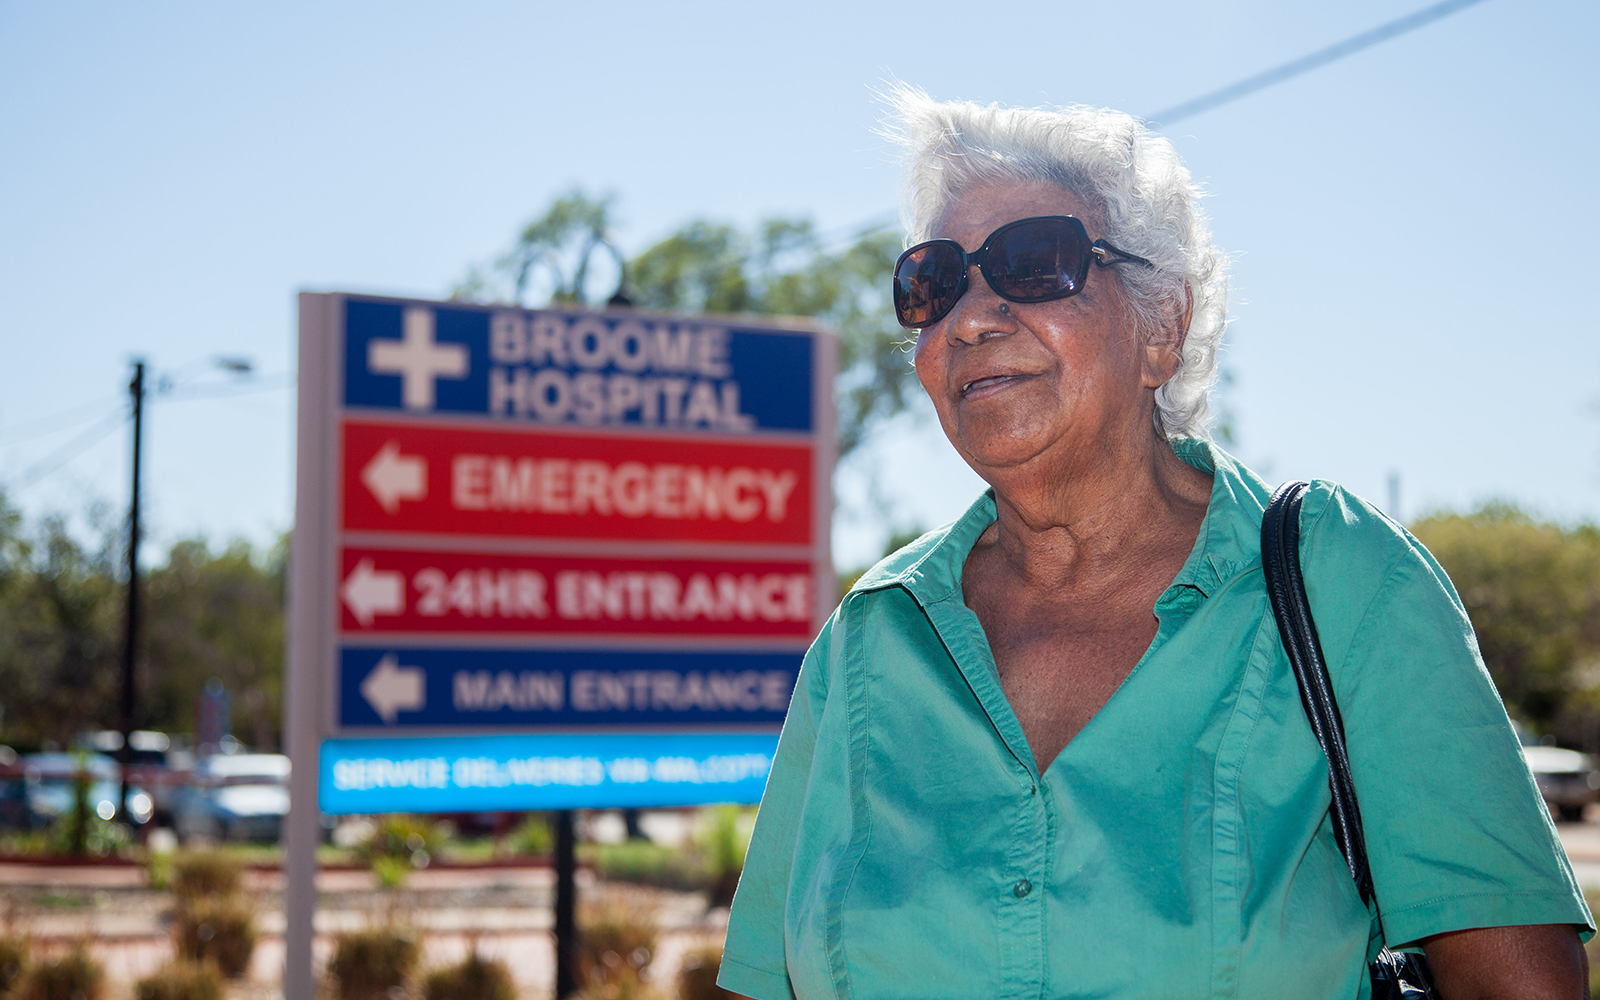 Indigenous eye health australia, Tracey hospital broome